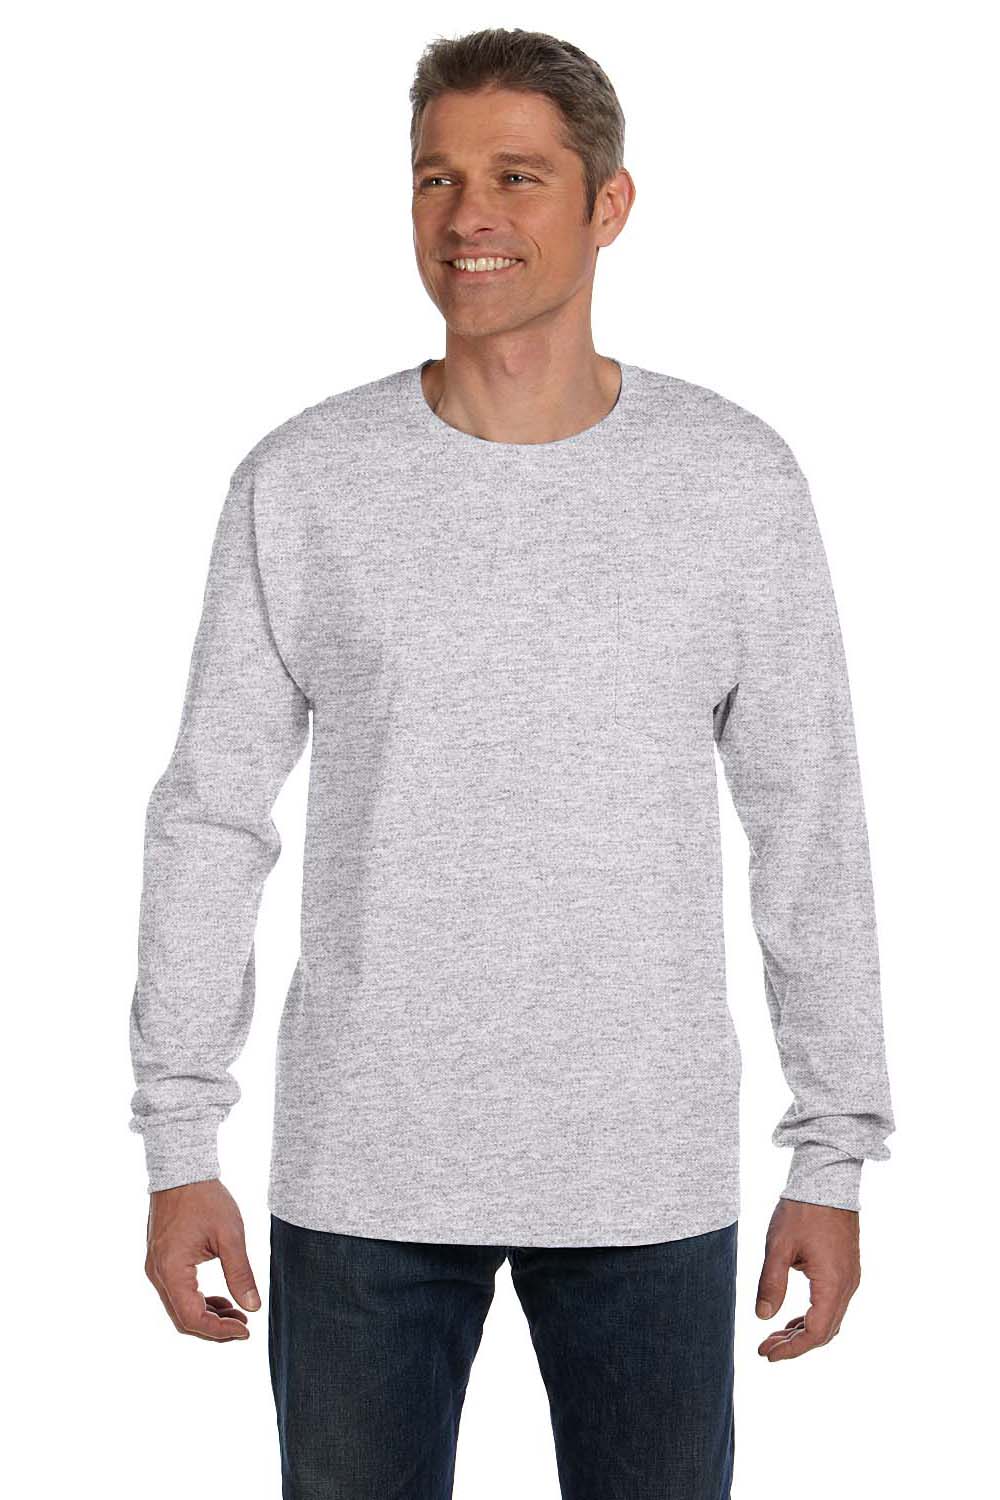 Hanes 5596 Mens ComfortSoft Long Sleeve Crewneck T-Shirt w/ Pocket Ash Grey Front